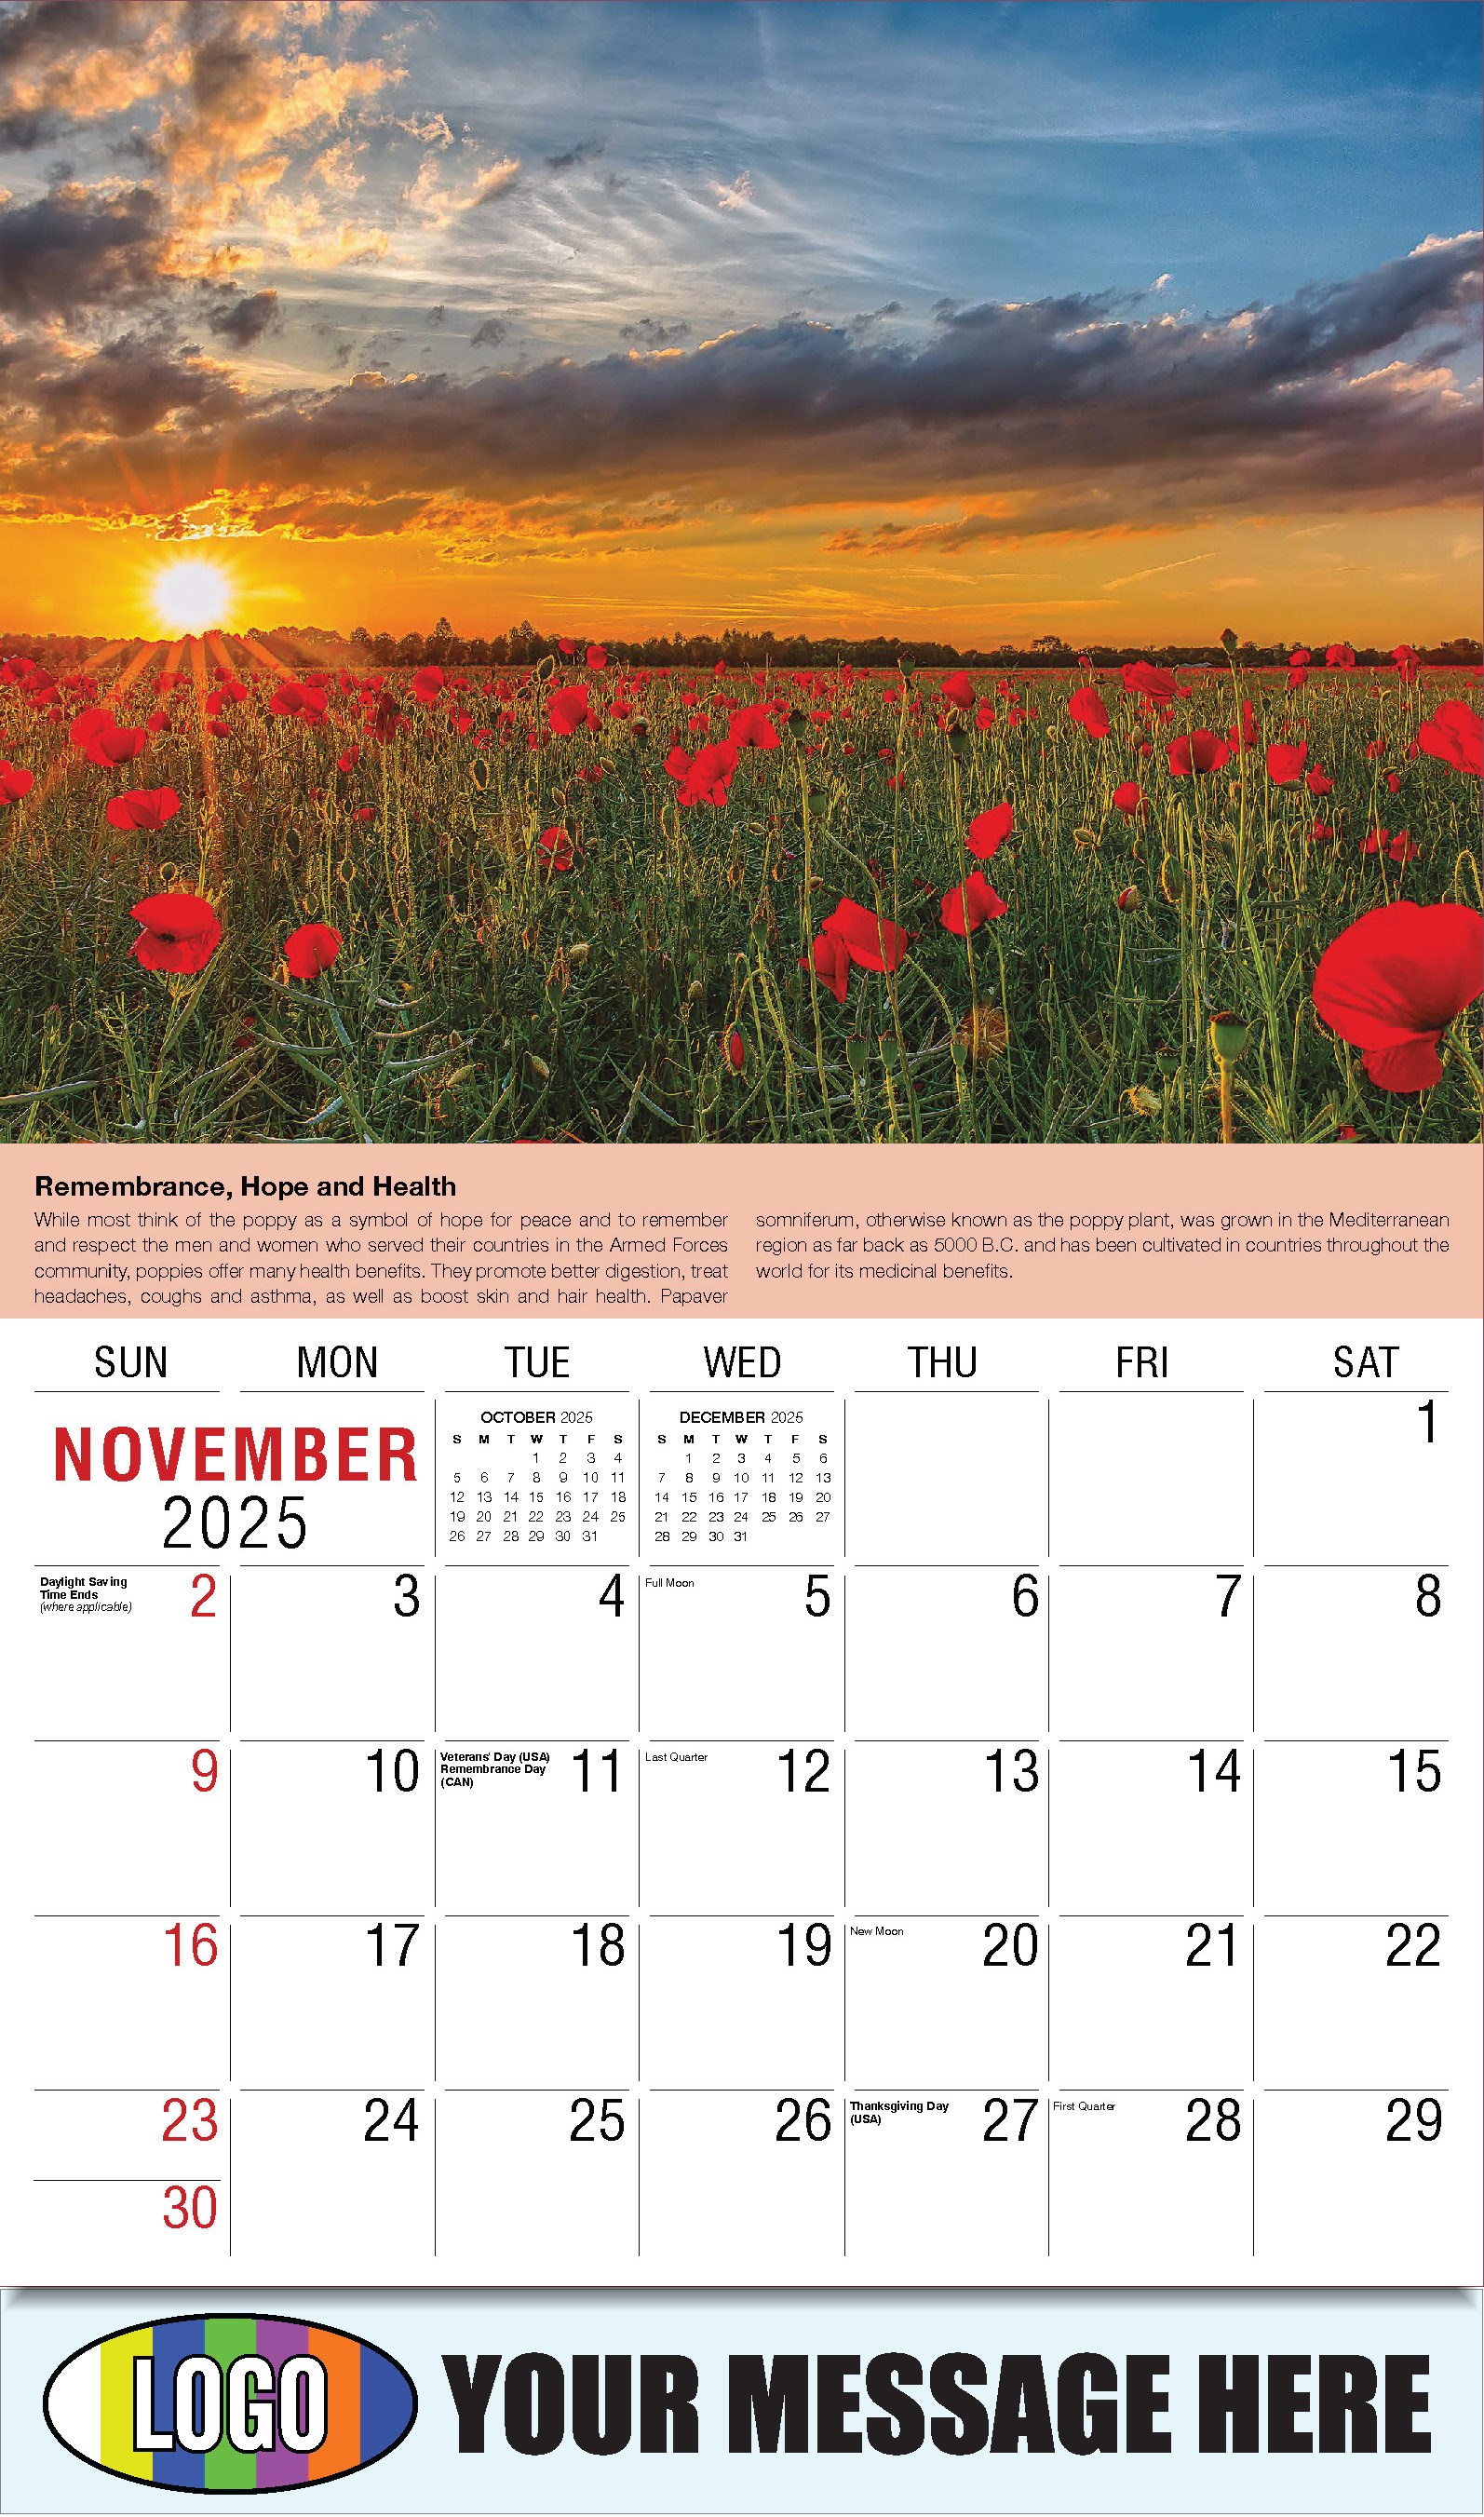 Planet Earth 2025 Business Promotional Wall Calendar - November